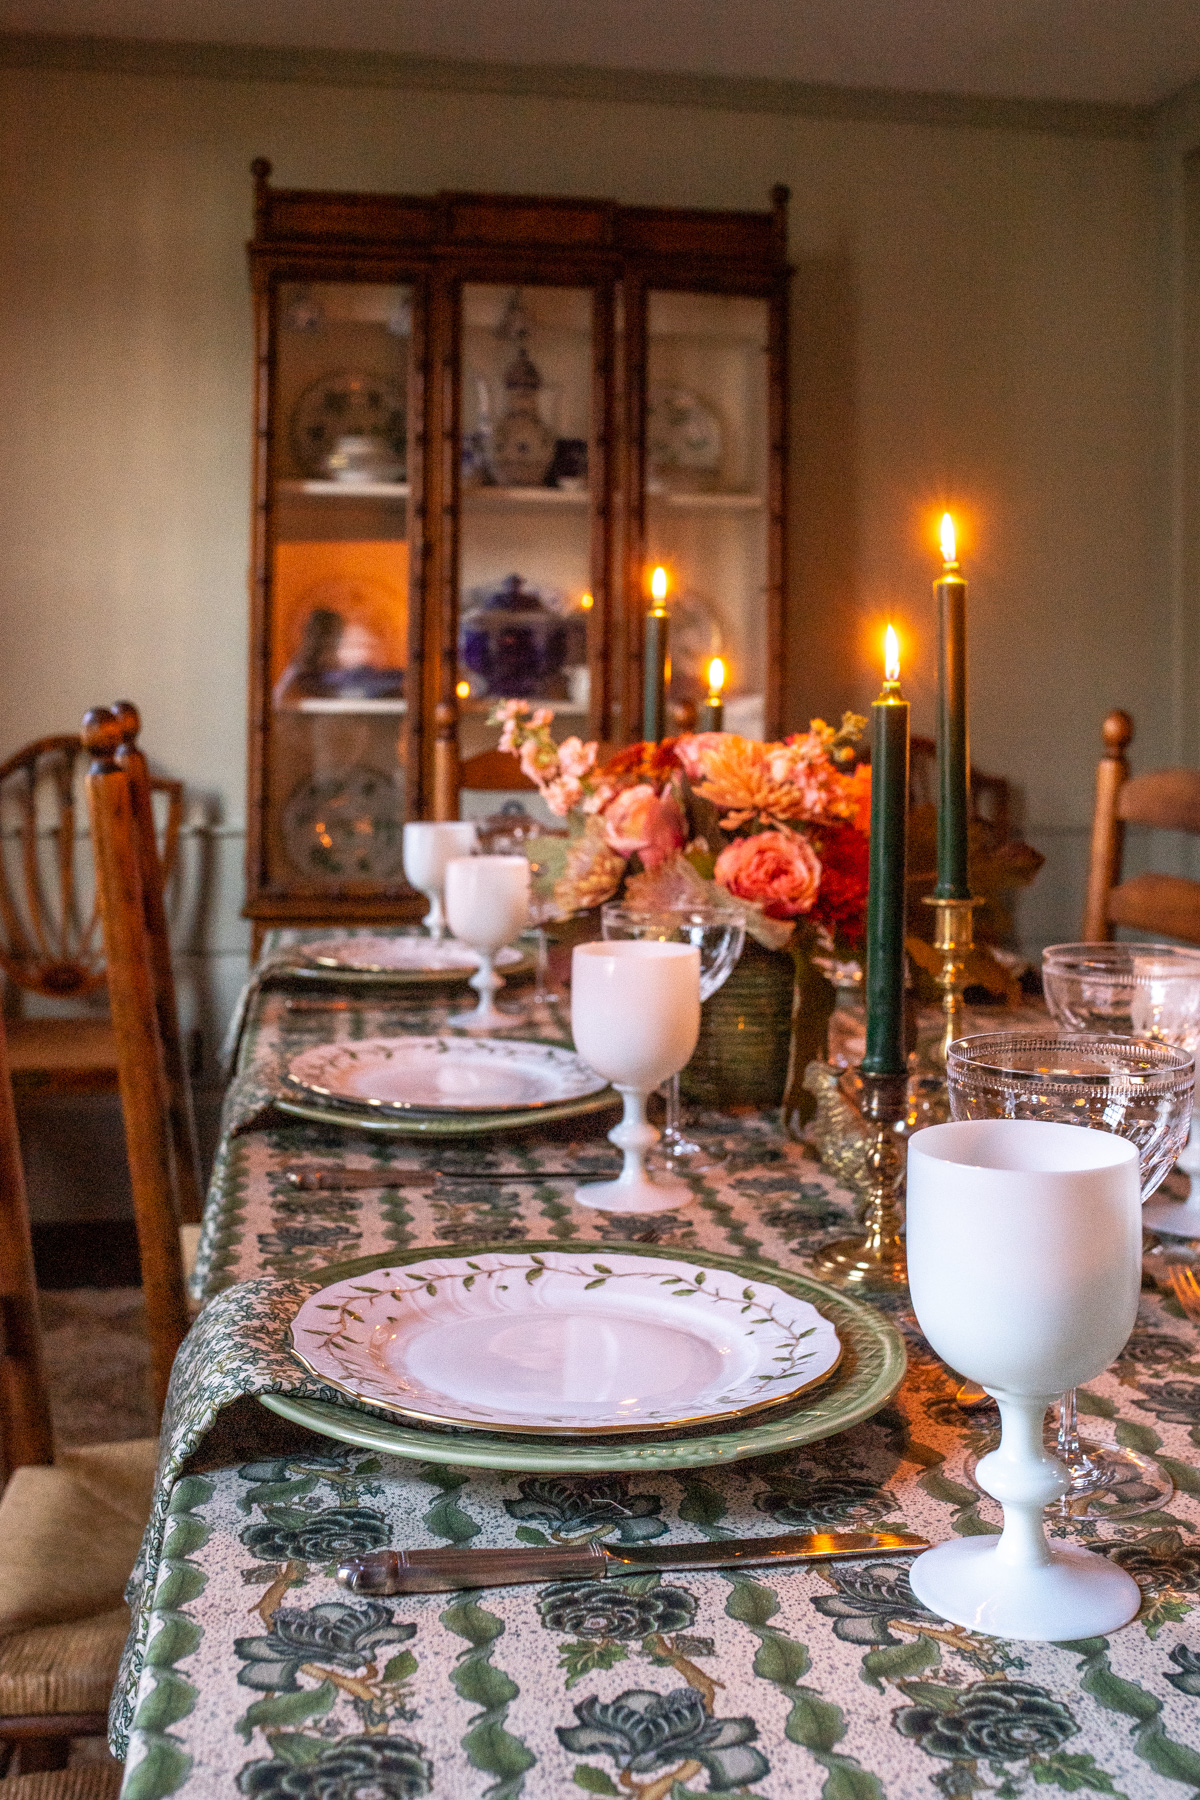 Stacie Flinner x Thanksgiving Table Herend Rothschild Garden-11.jpg